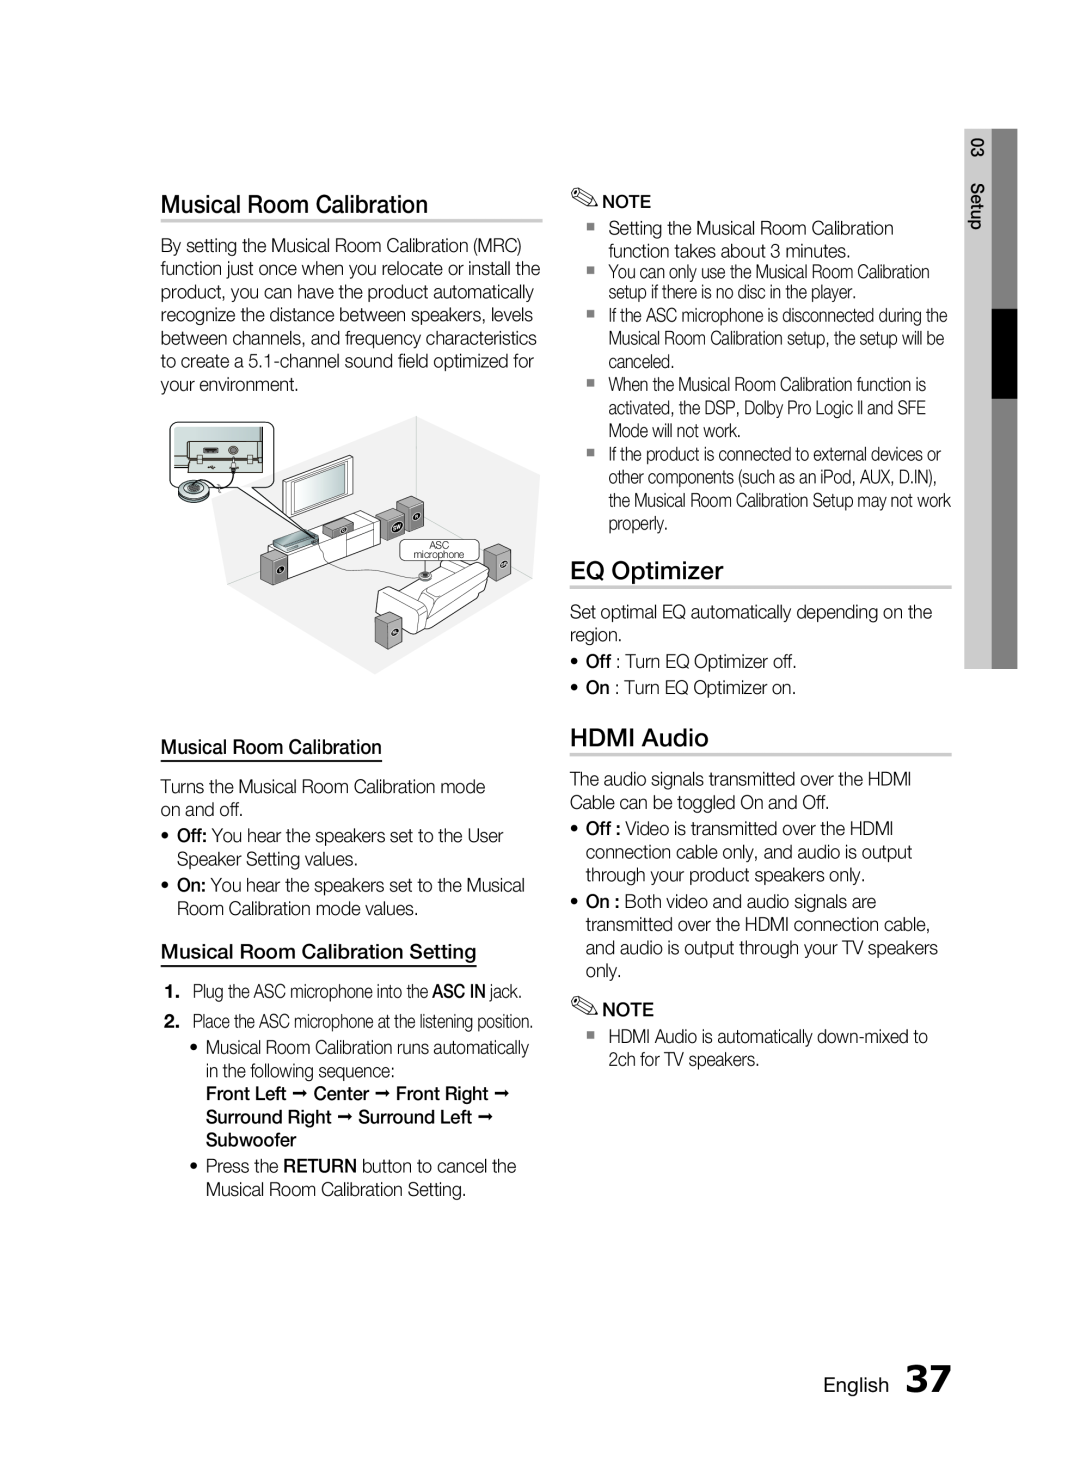 Samsung C6600 user manual EQ Optimizer, HDMI Audio, Musical Room Calibration Setting, English 